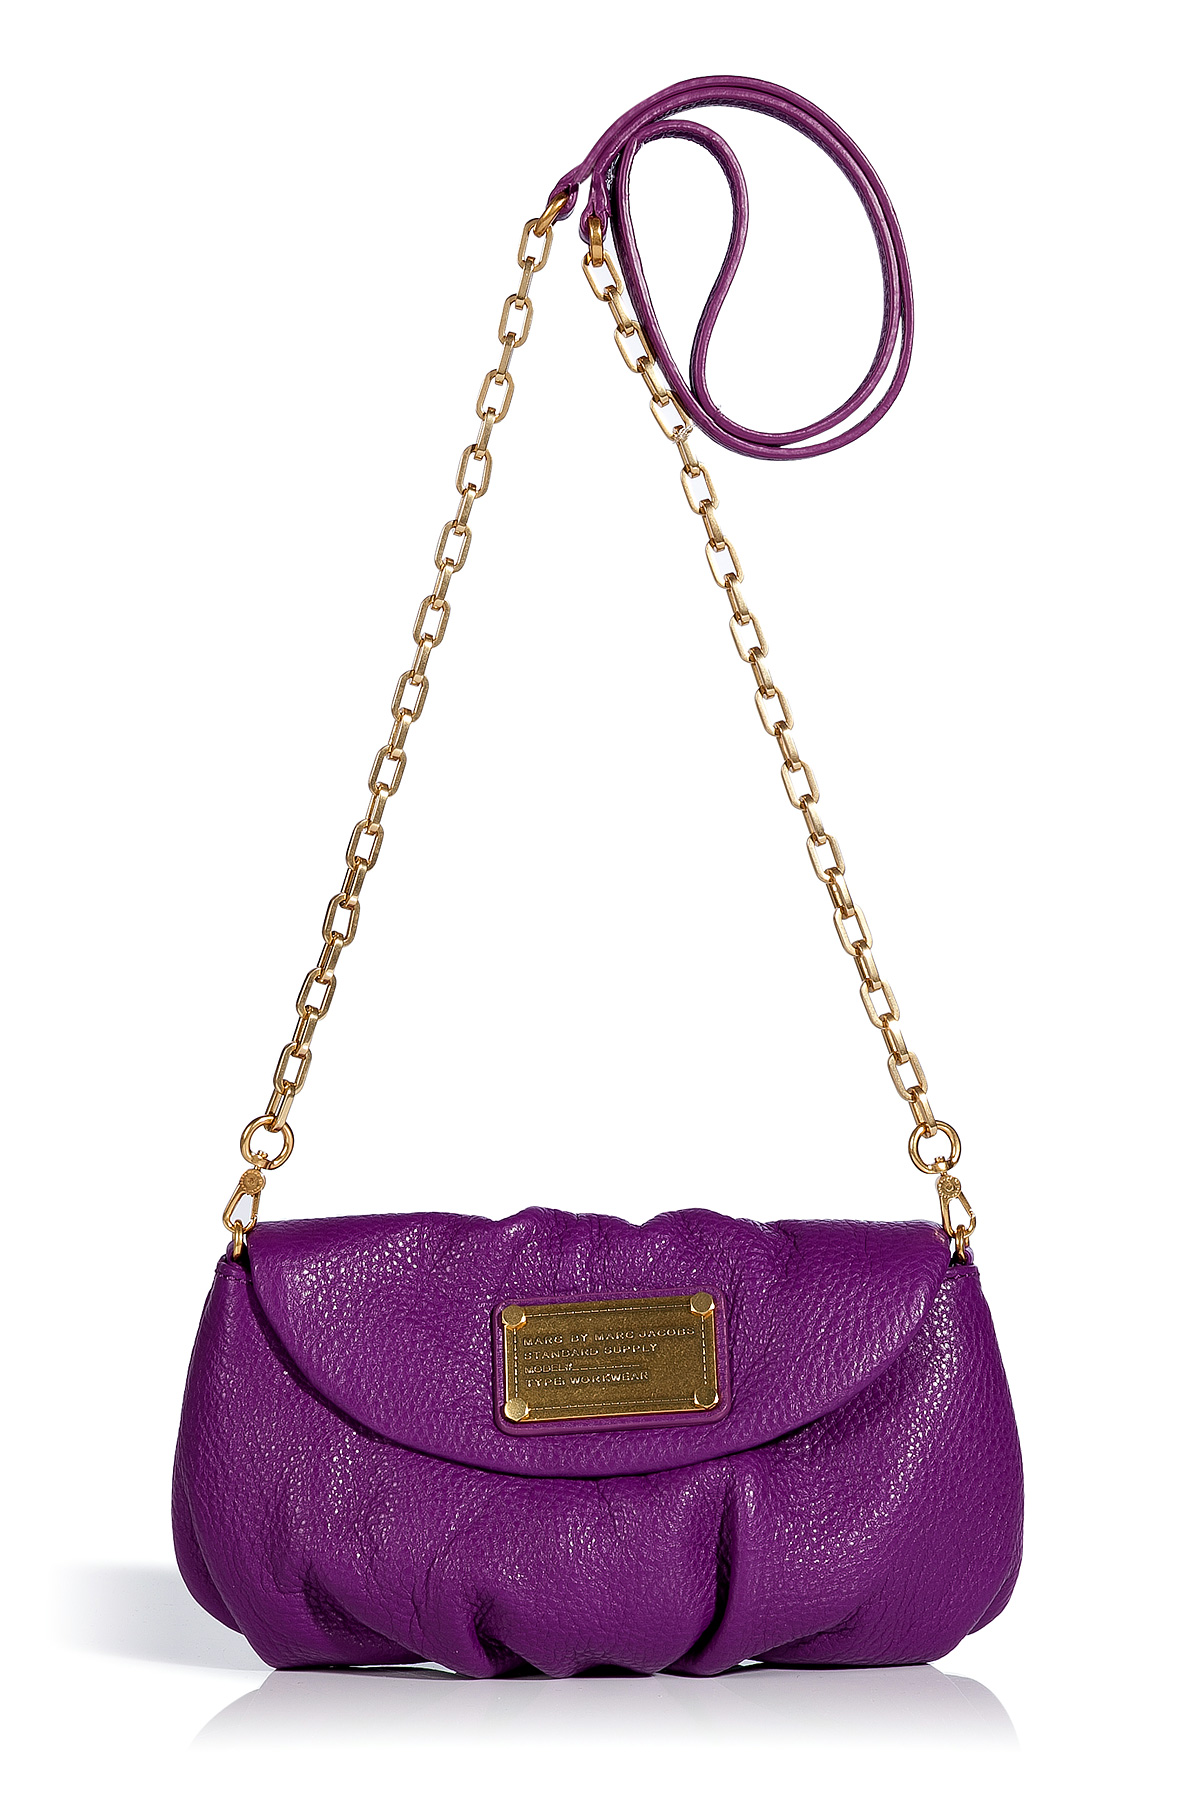 Marc By Marc Jacobs Violet Leather Karlie Crossbody Bag in Purple ...